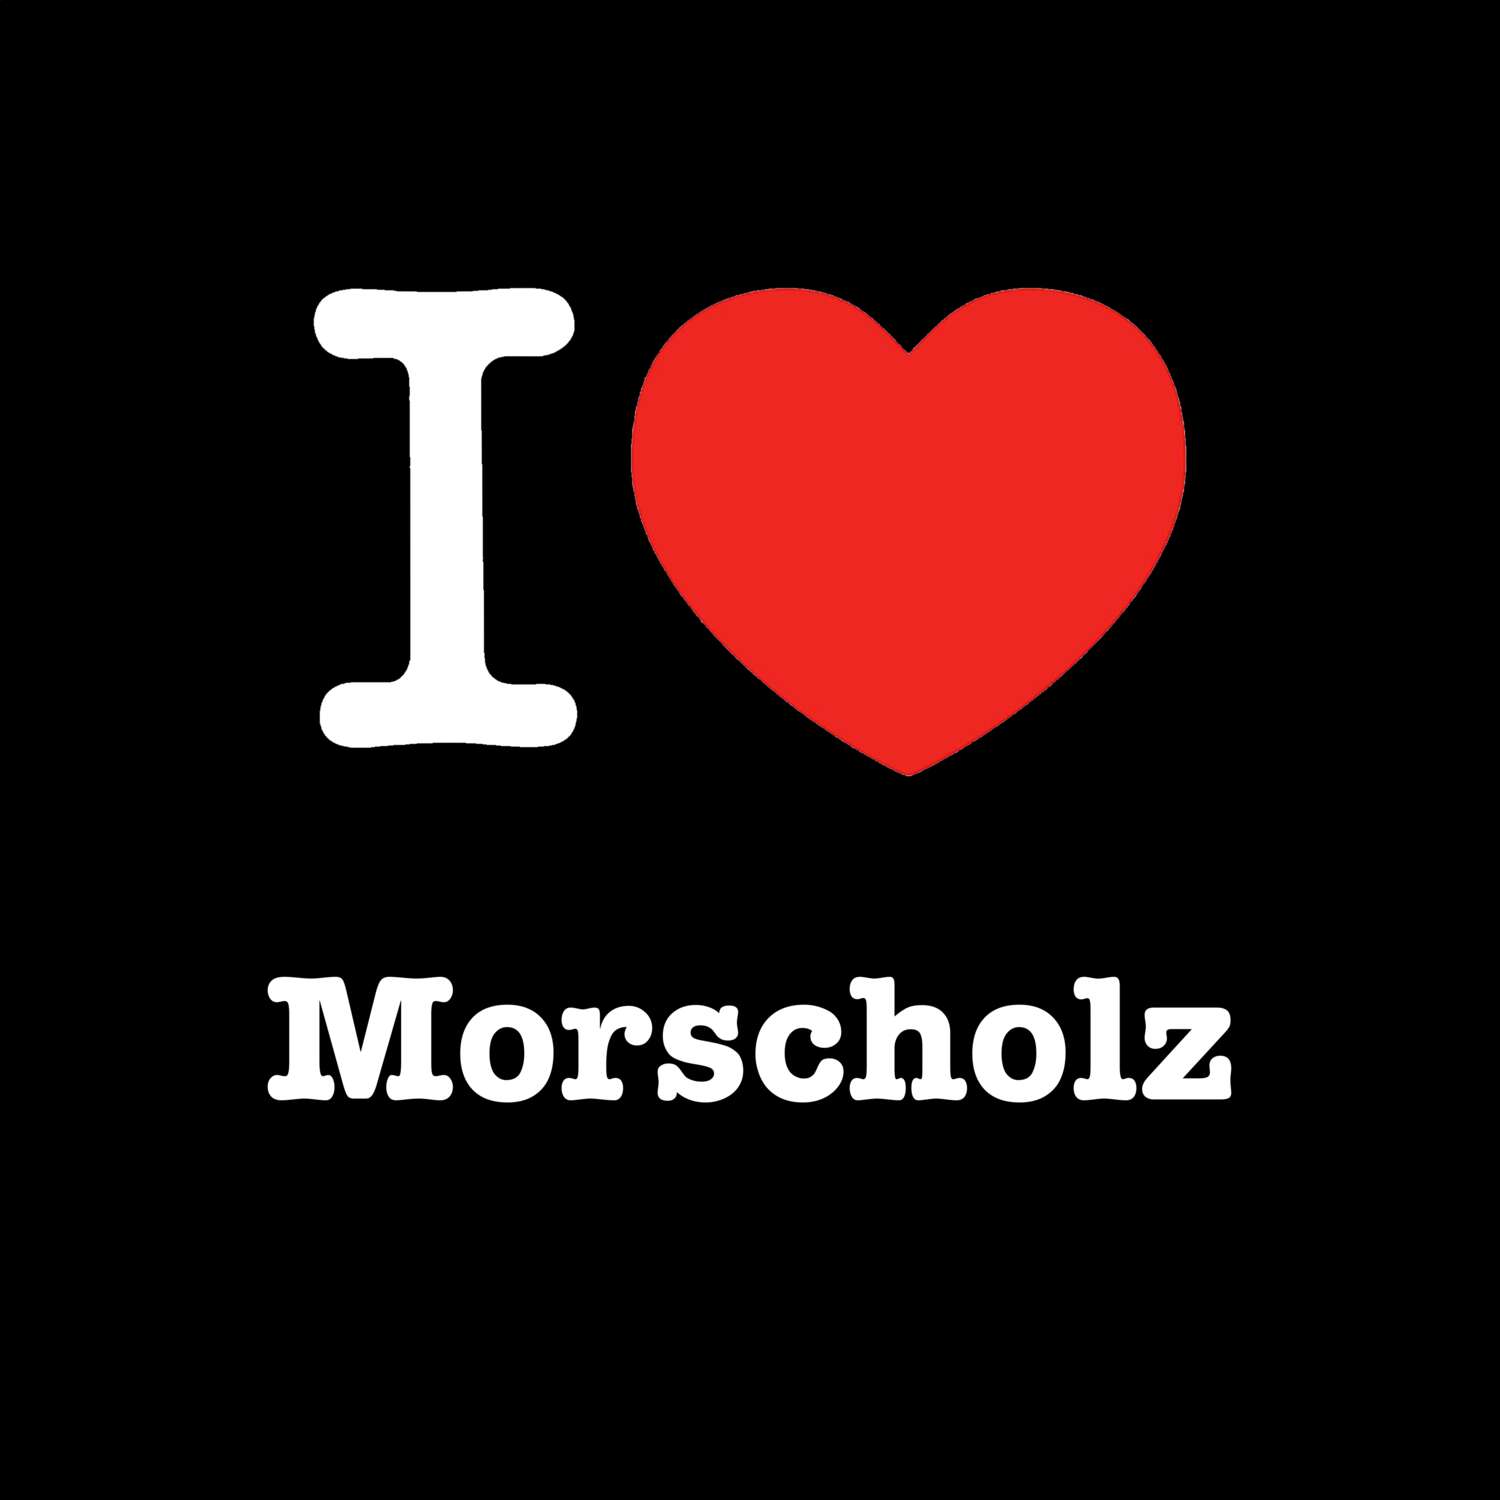 Morscholz T-Shirt »I love«